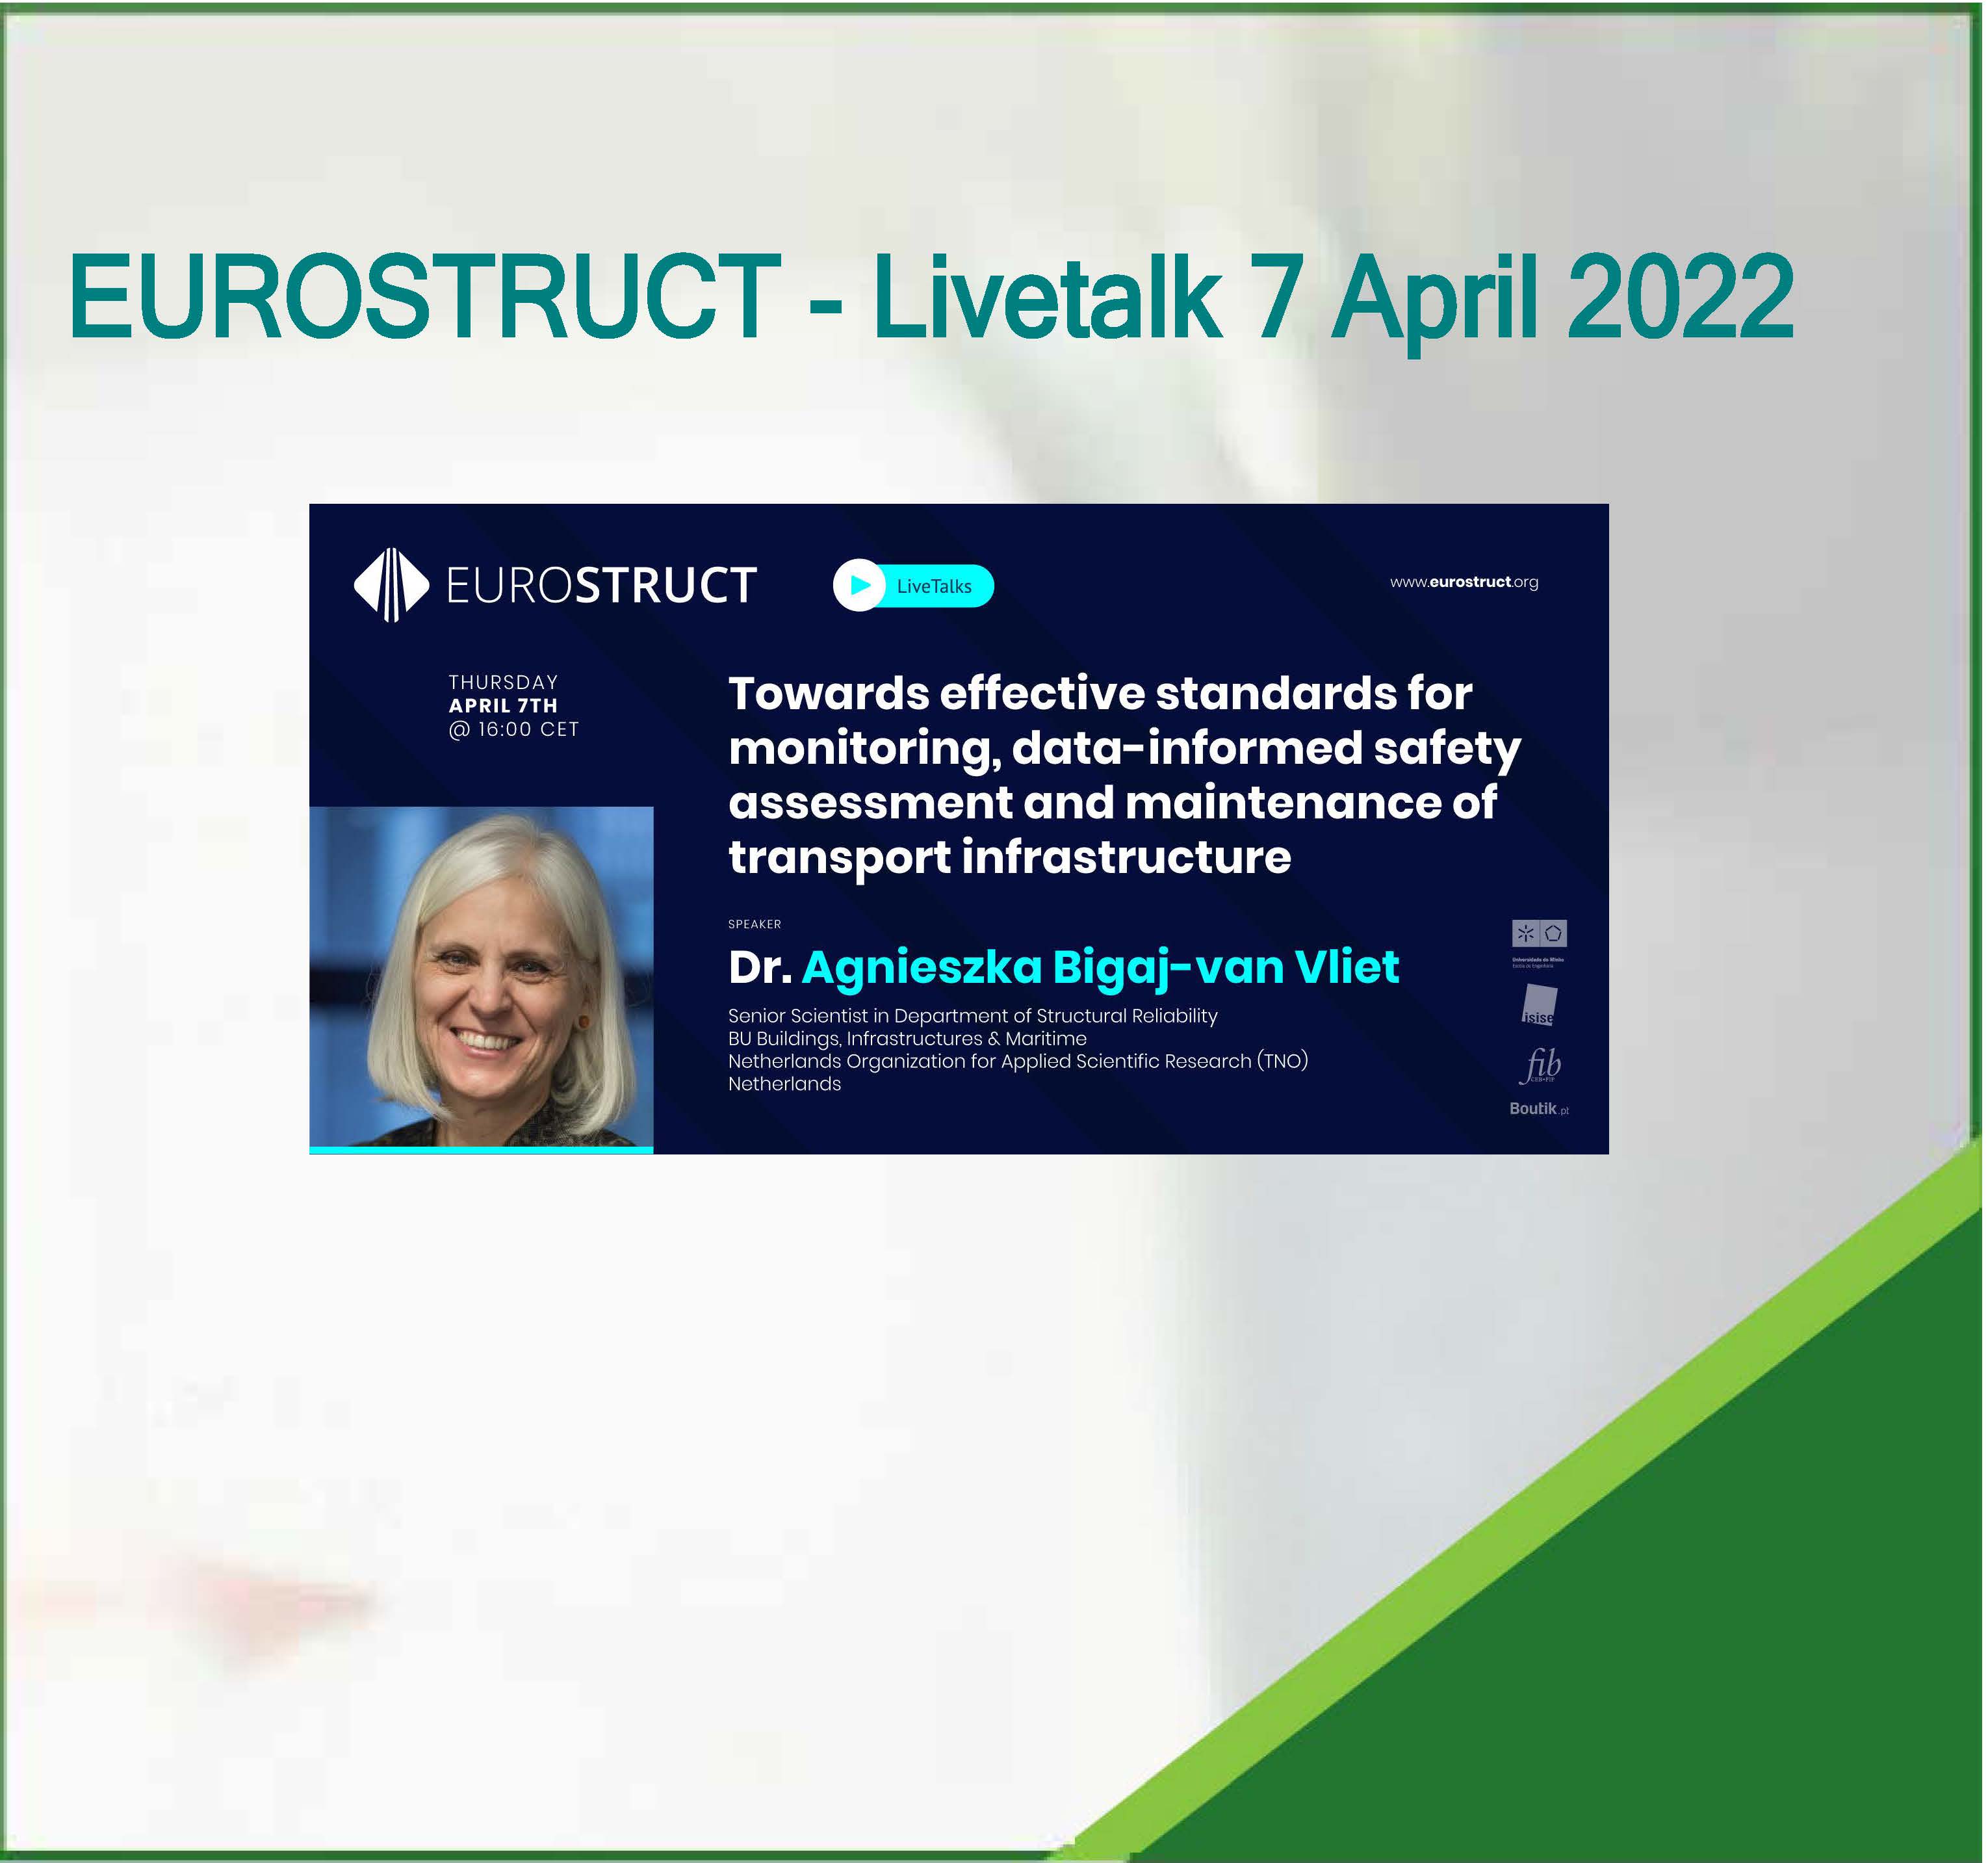 LiveTalk – Towards effective standards for monitoring, data-informed safety assessment and maintenance of transport infrastructure 7th April 2022 at 16:00 CET